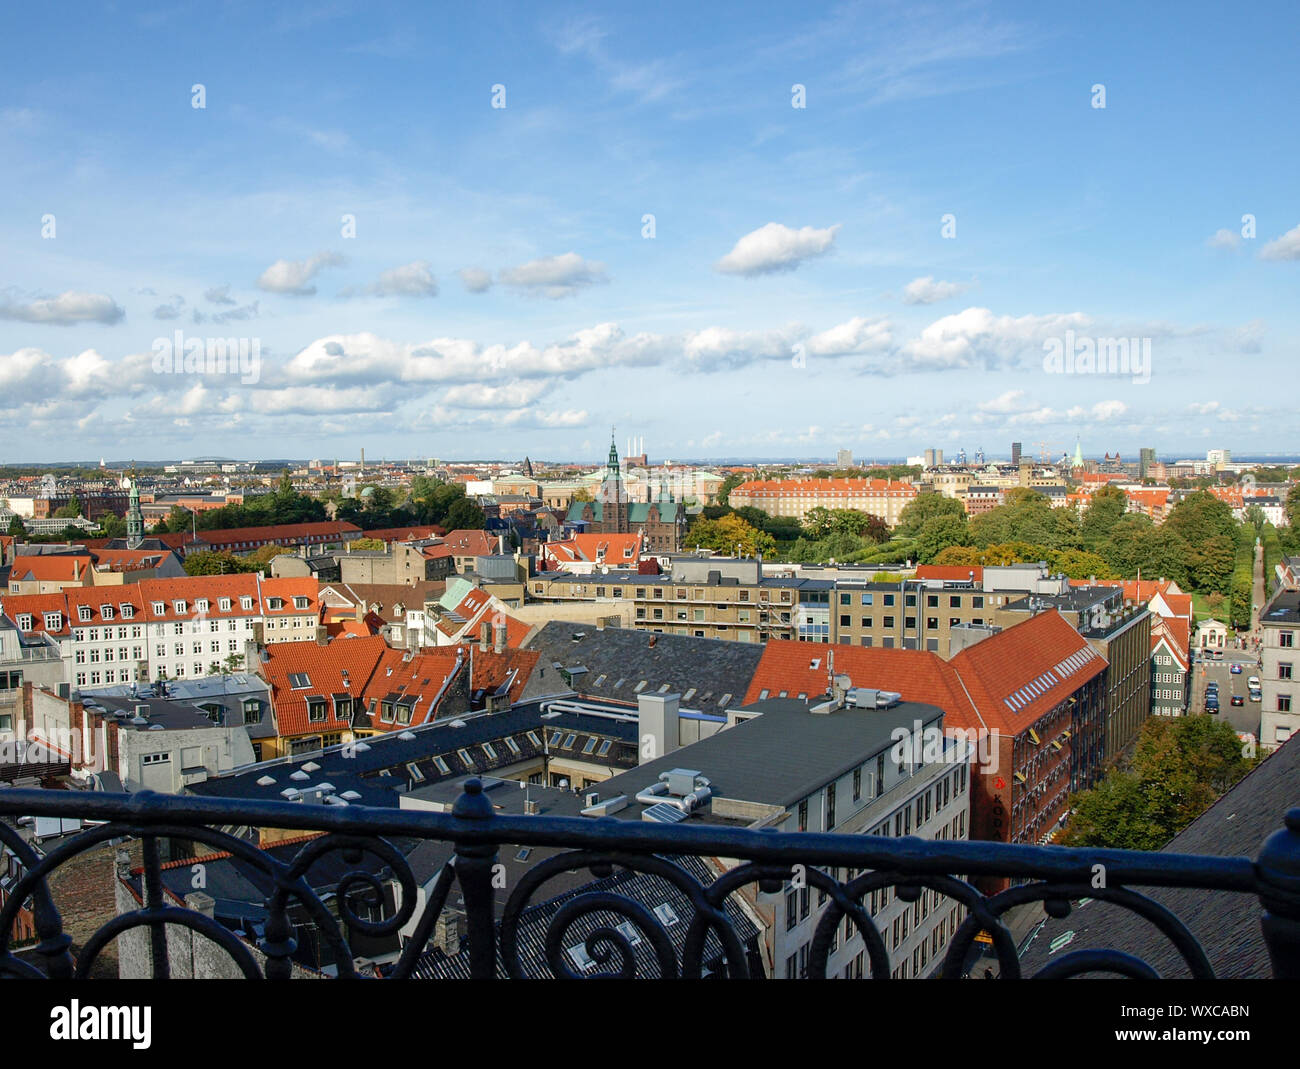 A view of Copenhagen skyline from observation deck of the Rundetårn (Rundetaarn, also known as the Round Tower in English). Copenhagen, Denmark. Stock Photo